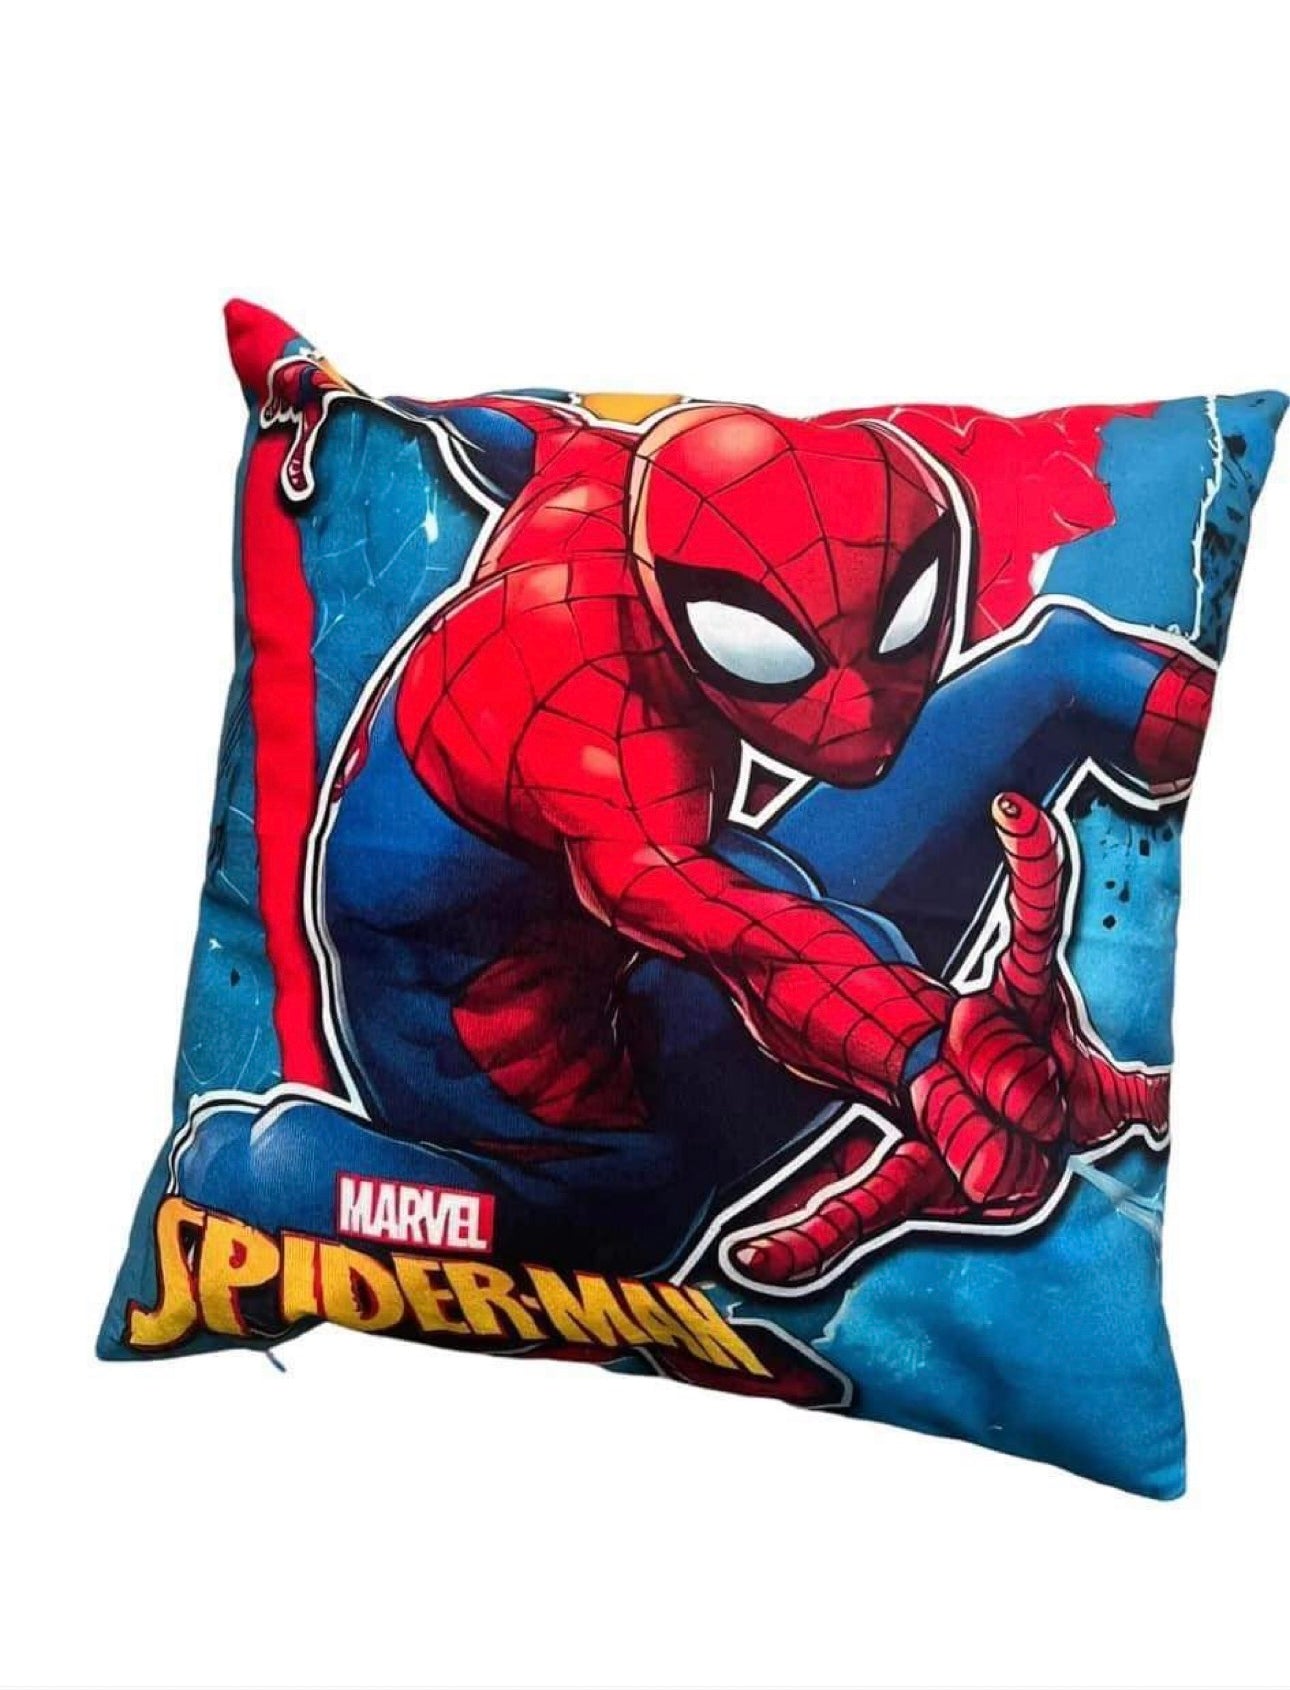 Spidermen cushion